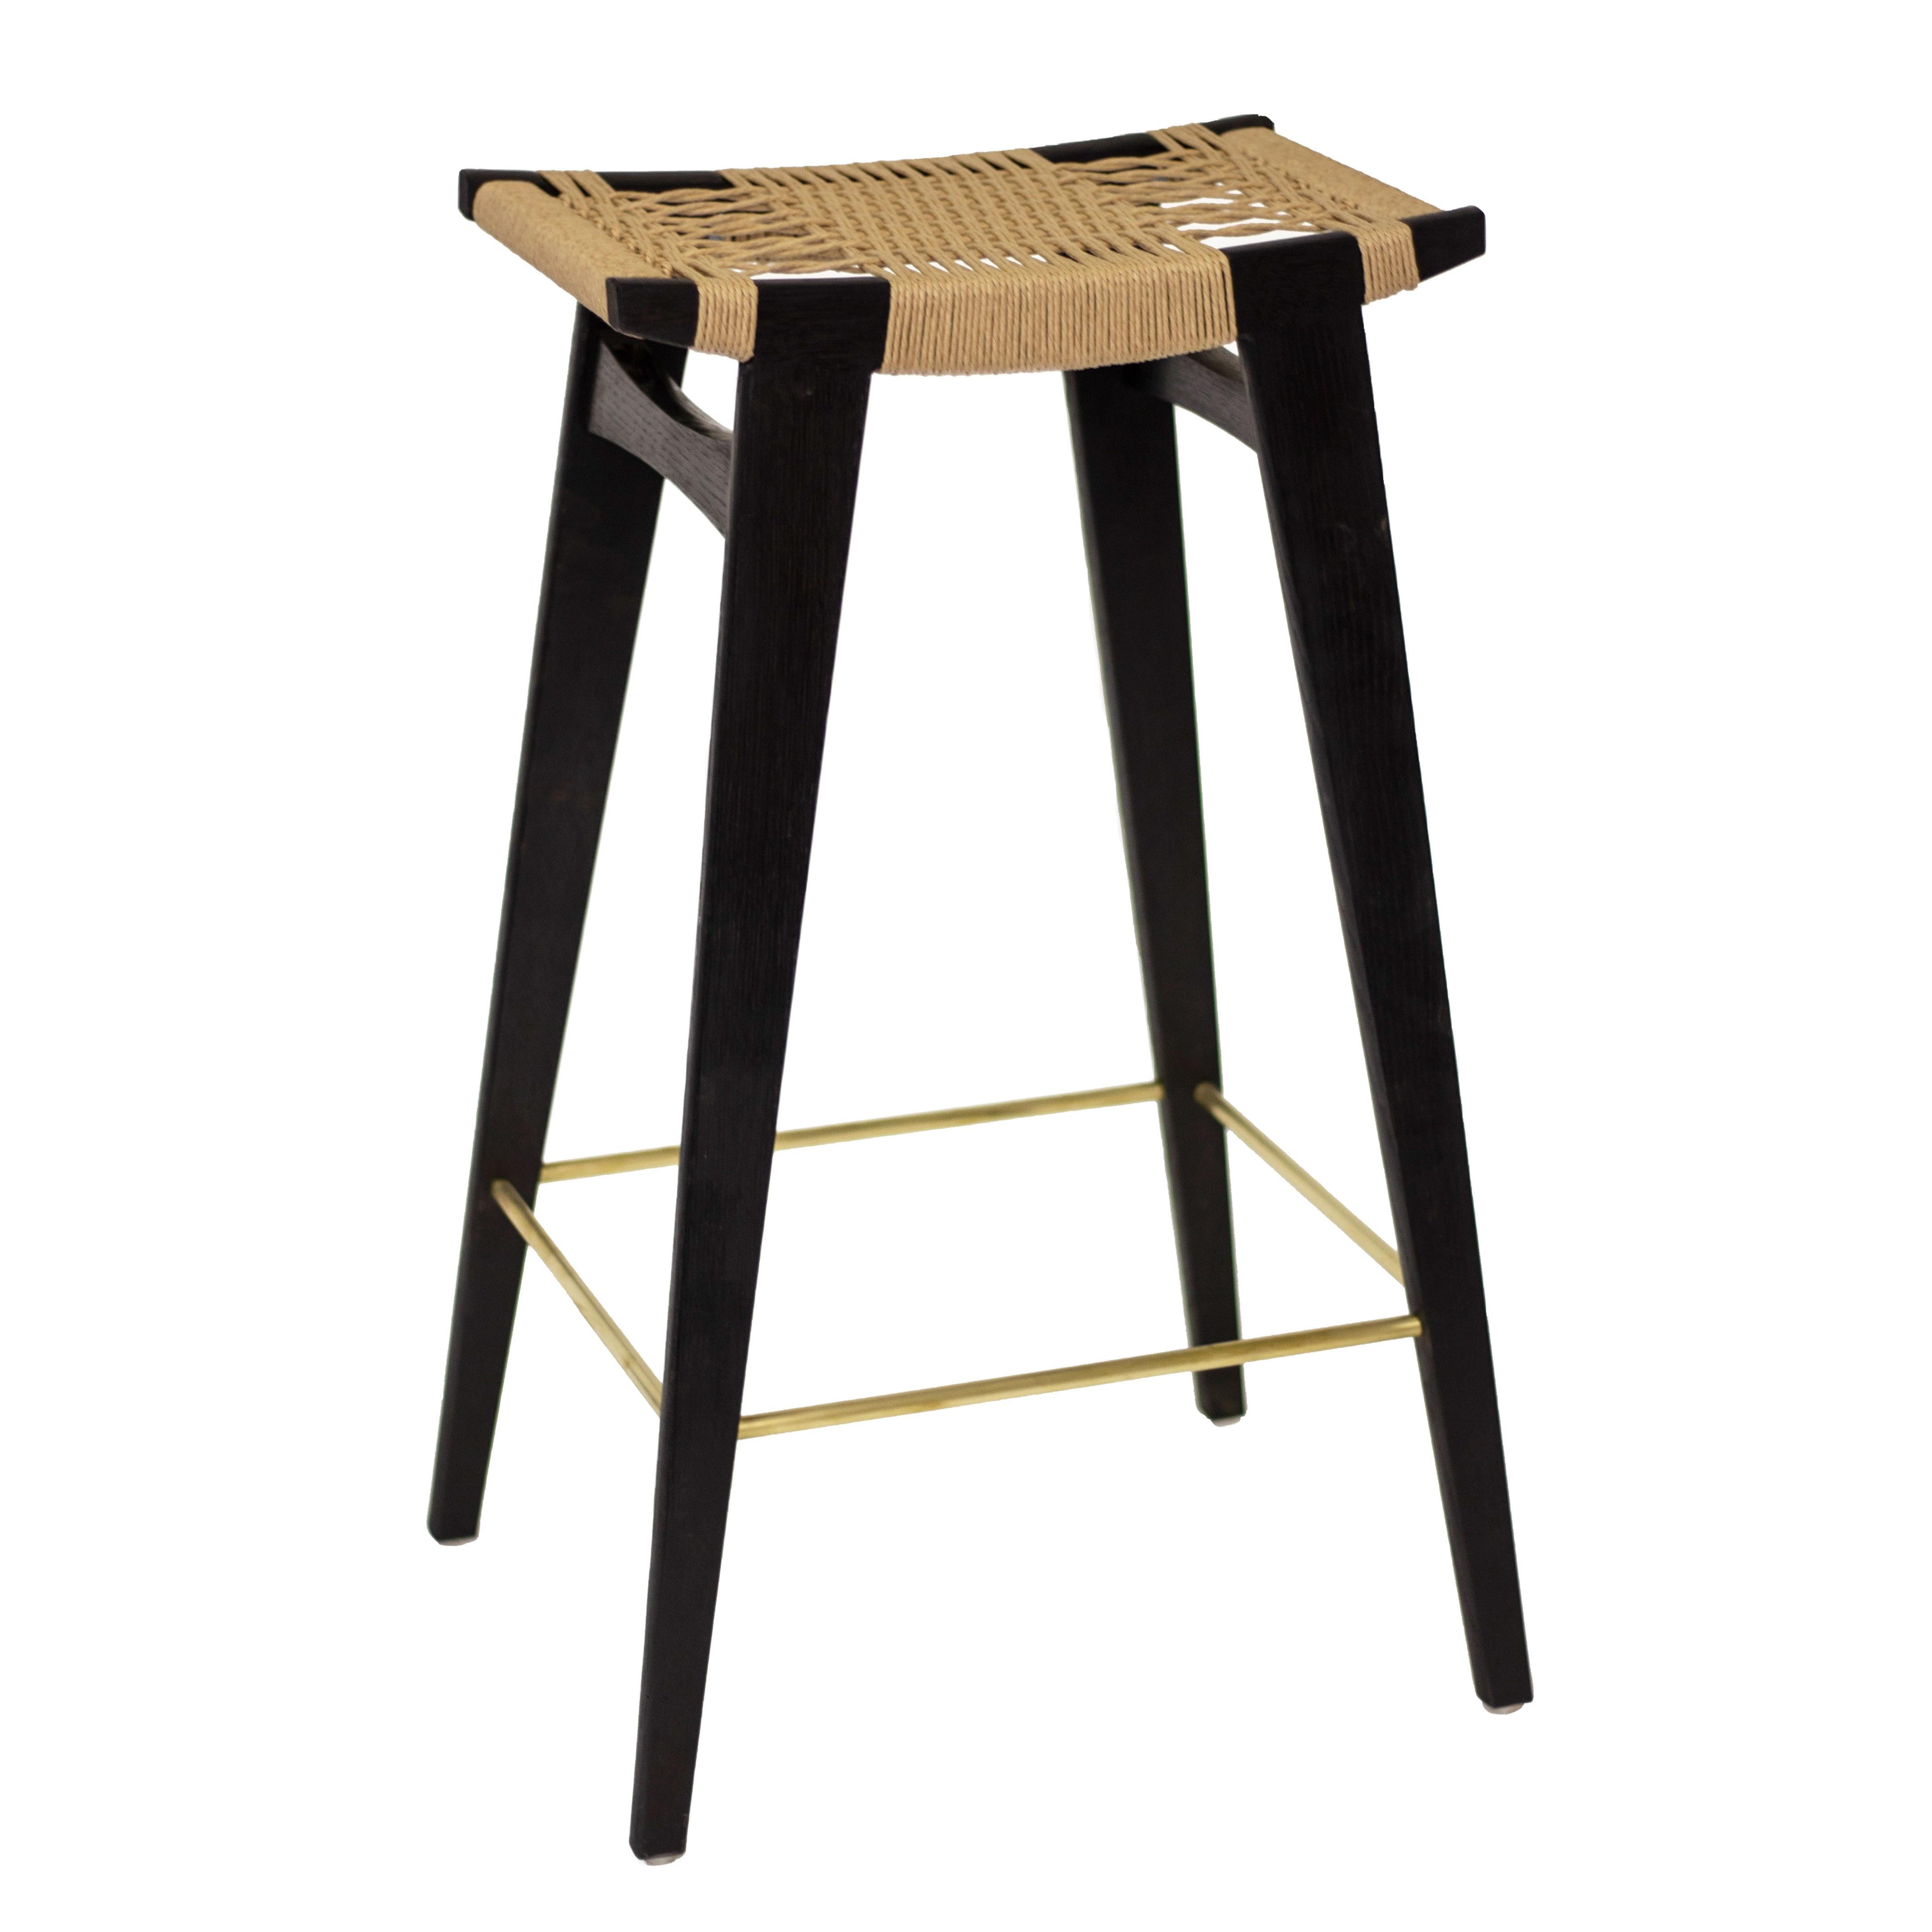 Our high-pi bar stool at 85cm (33.5